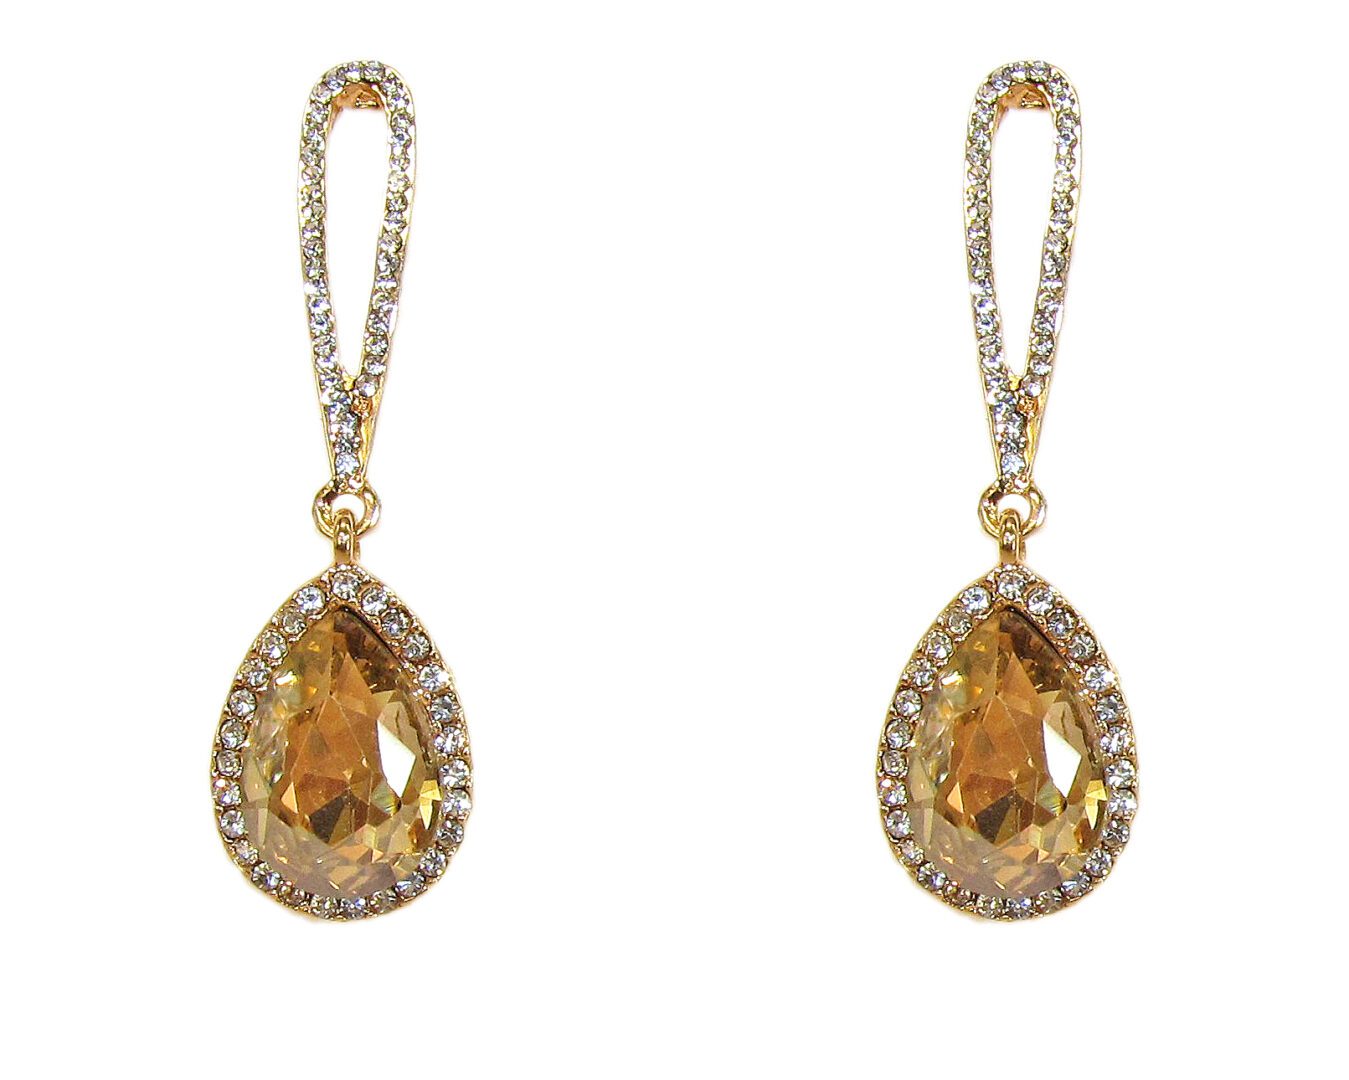 pair of earrings with teardrop amber crystals